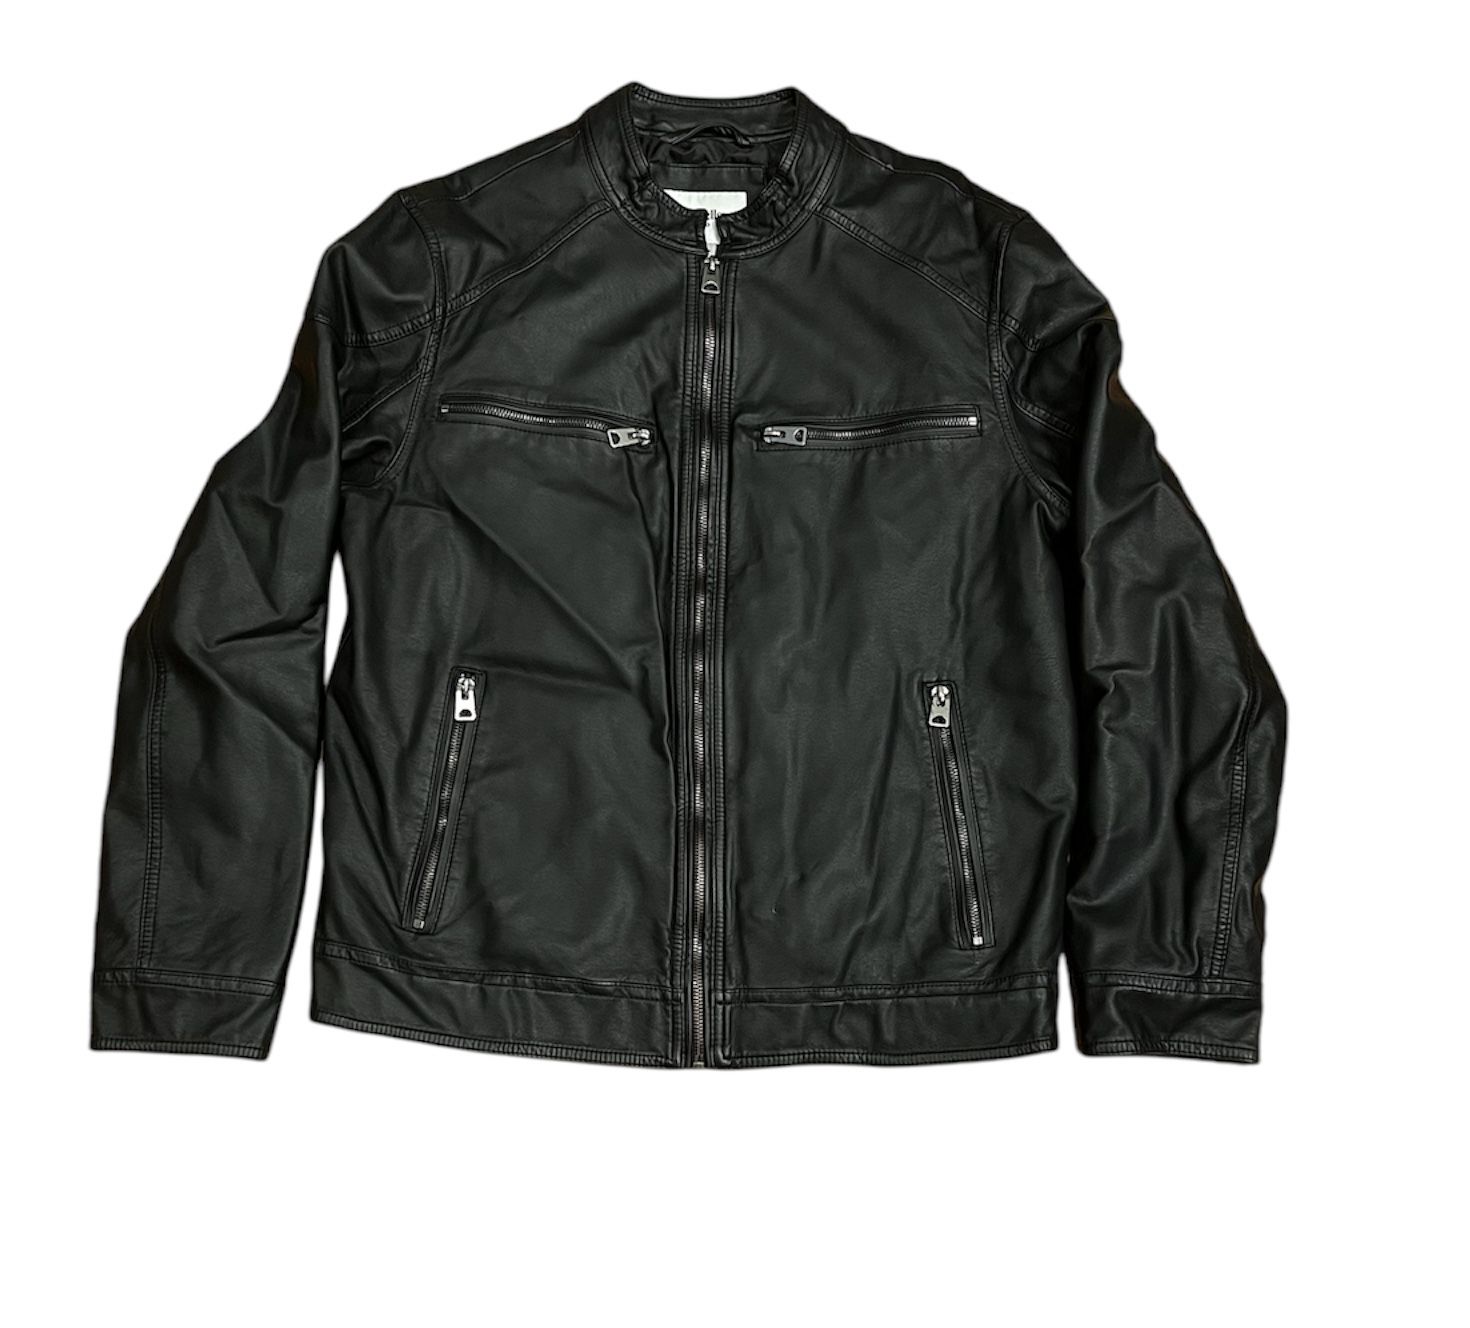 Goodfellow & Co Men's Faux Leather Jacket  Black Medium